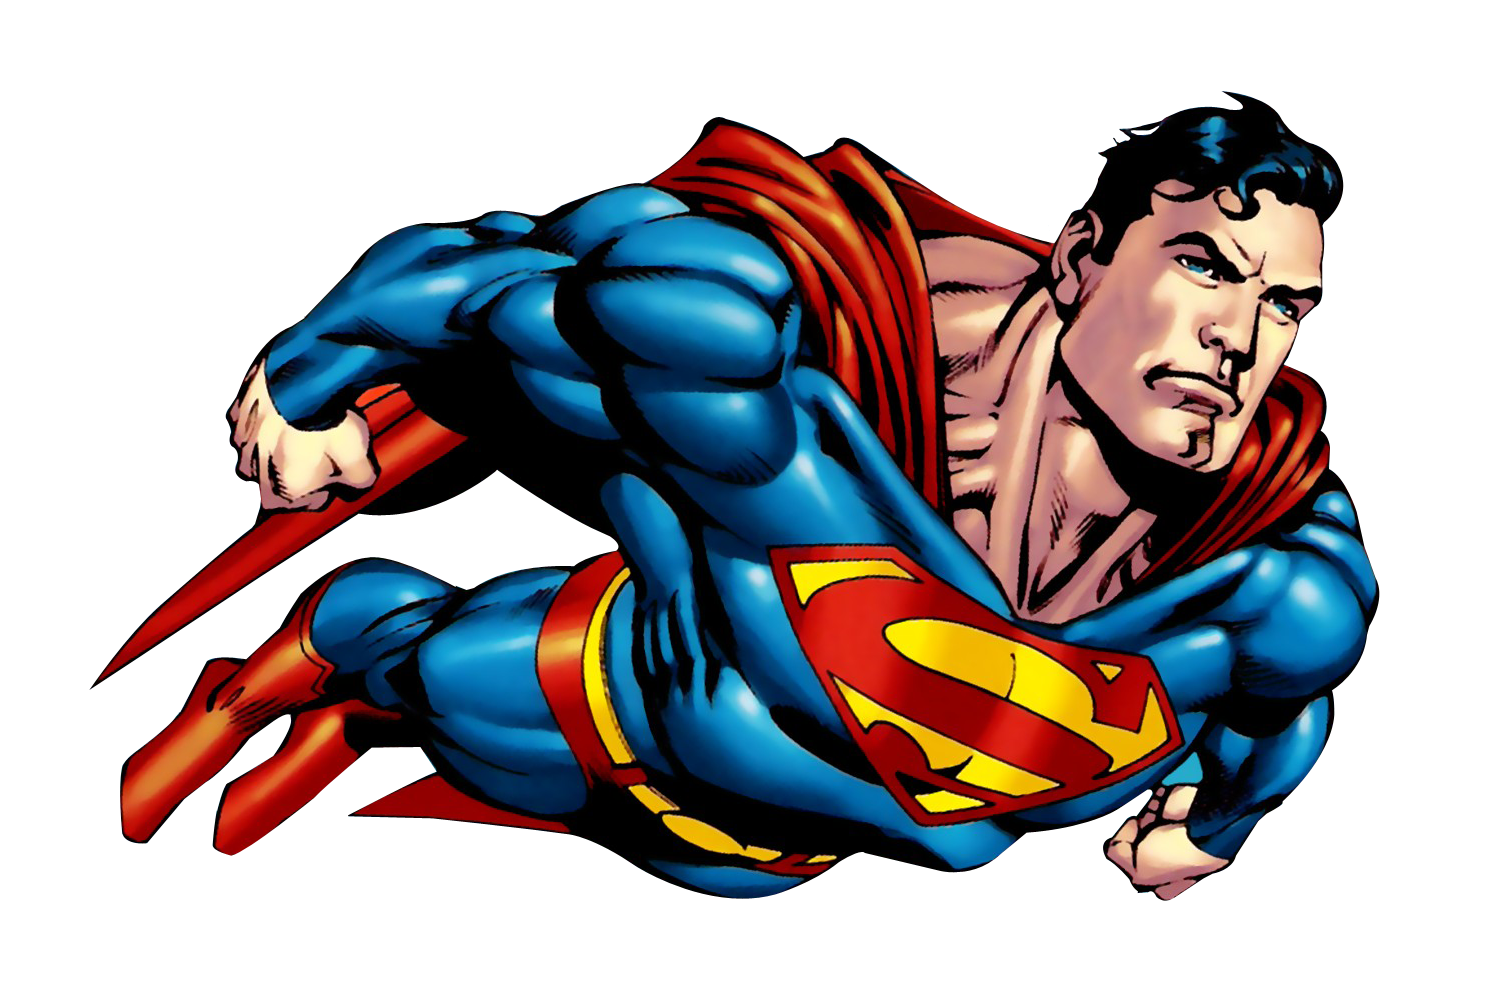 Superman voando download de imagem transparente PNG